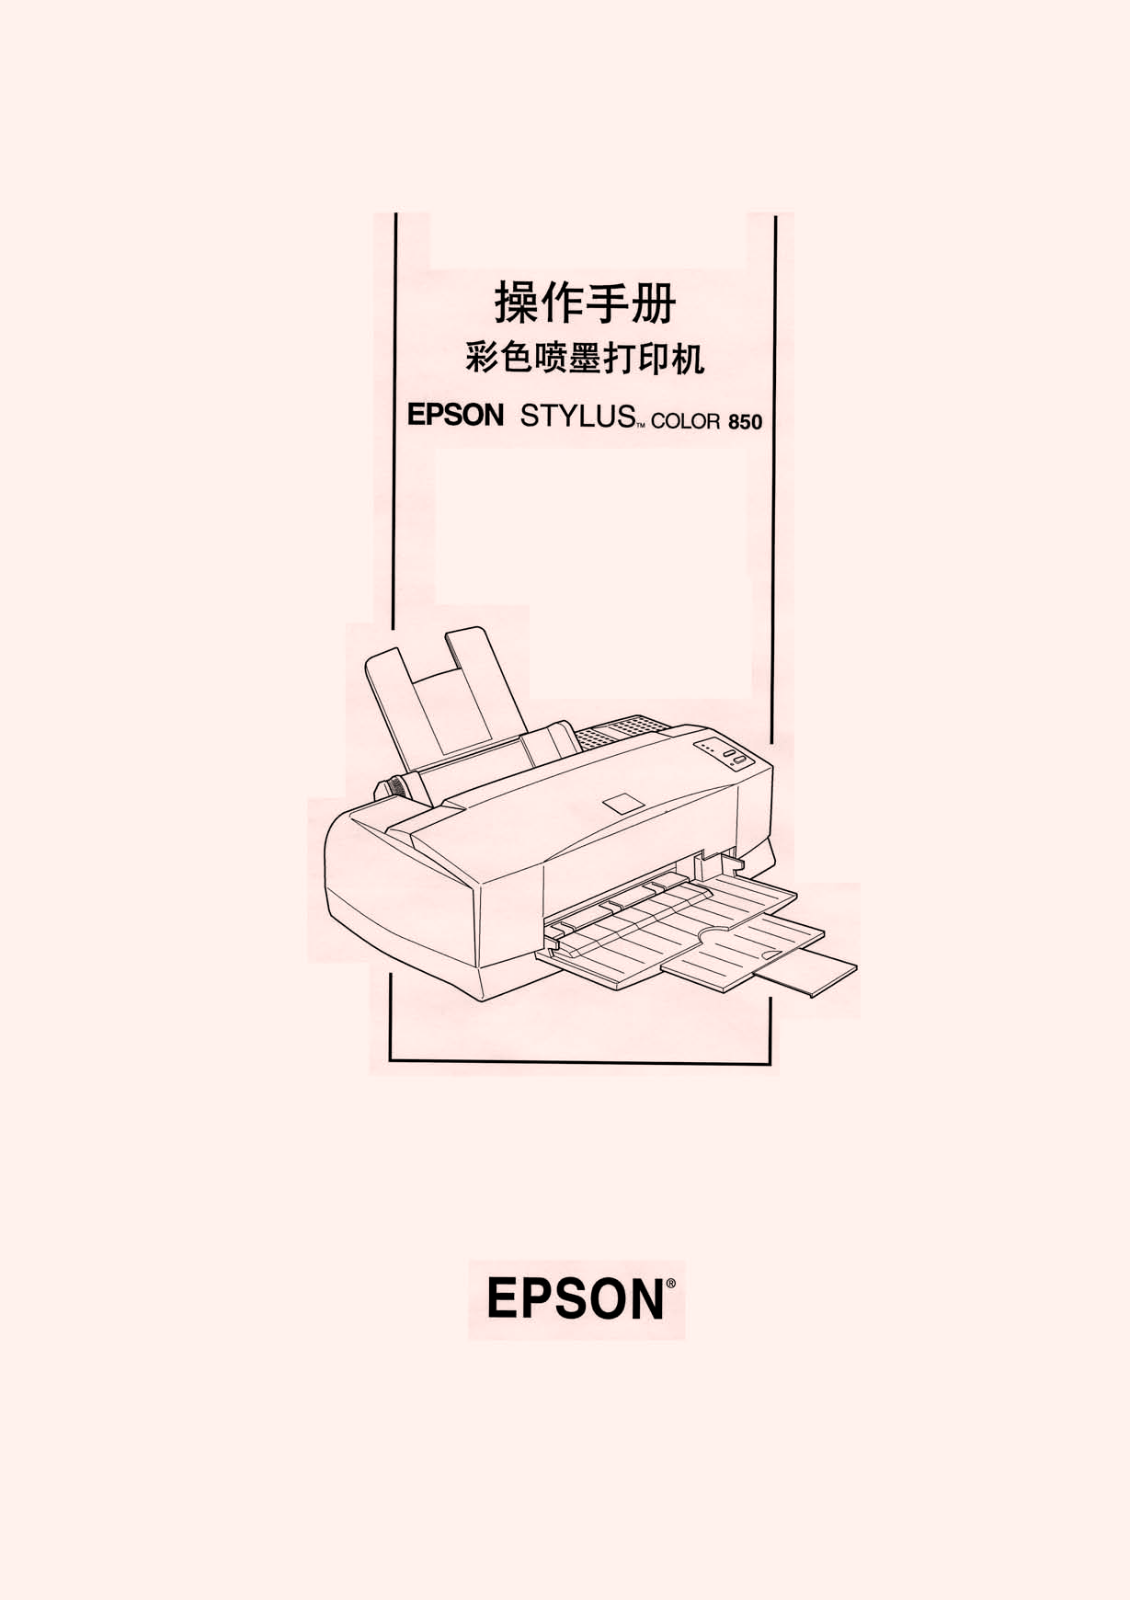 Epson STYLUS COLOR 850 User Manual